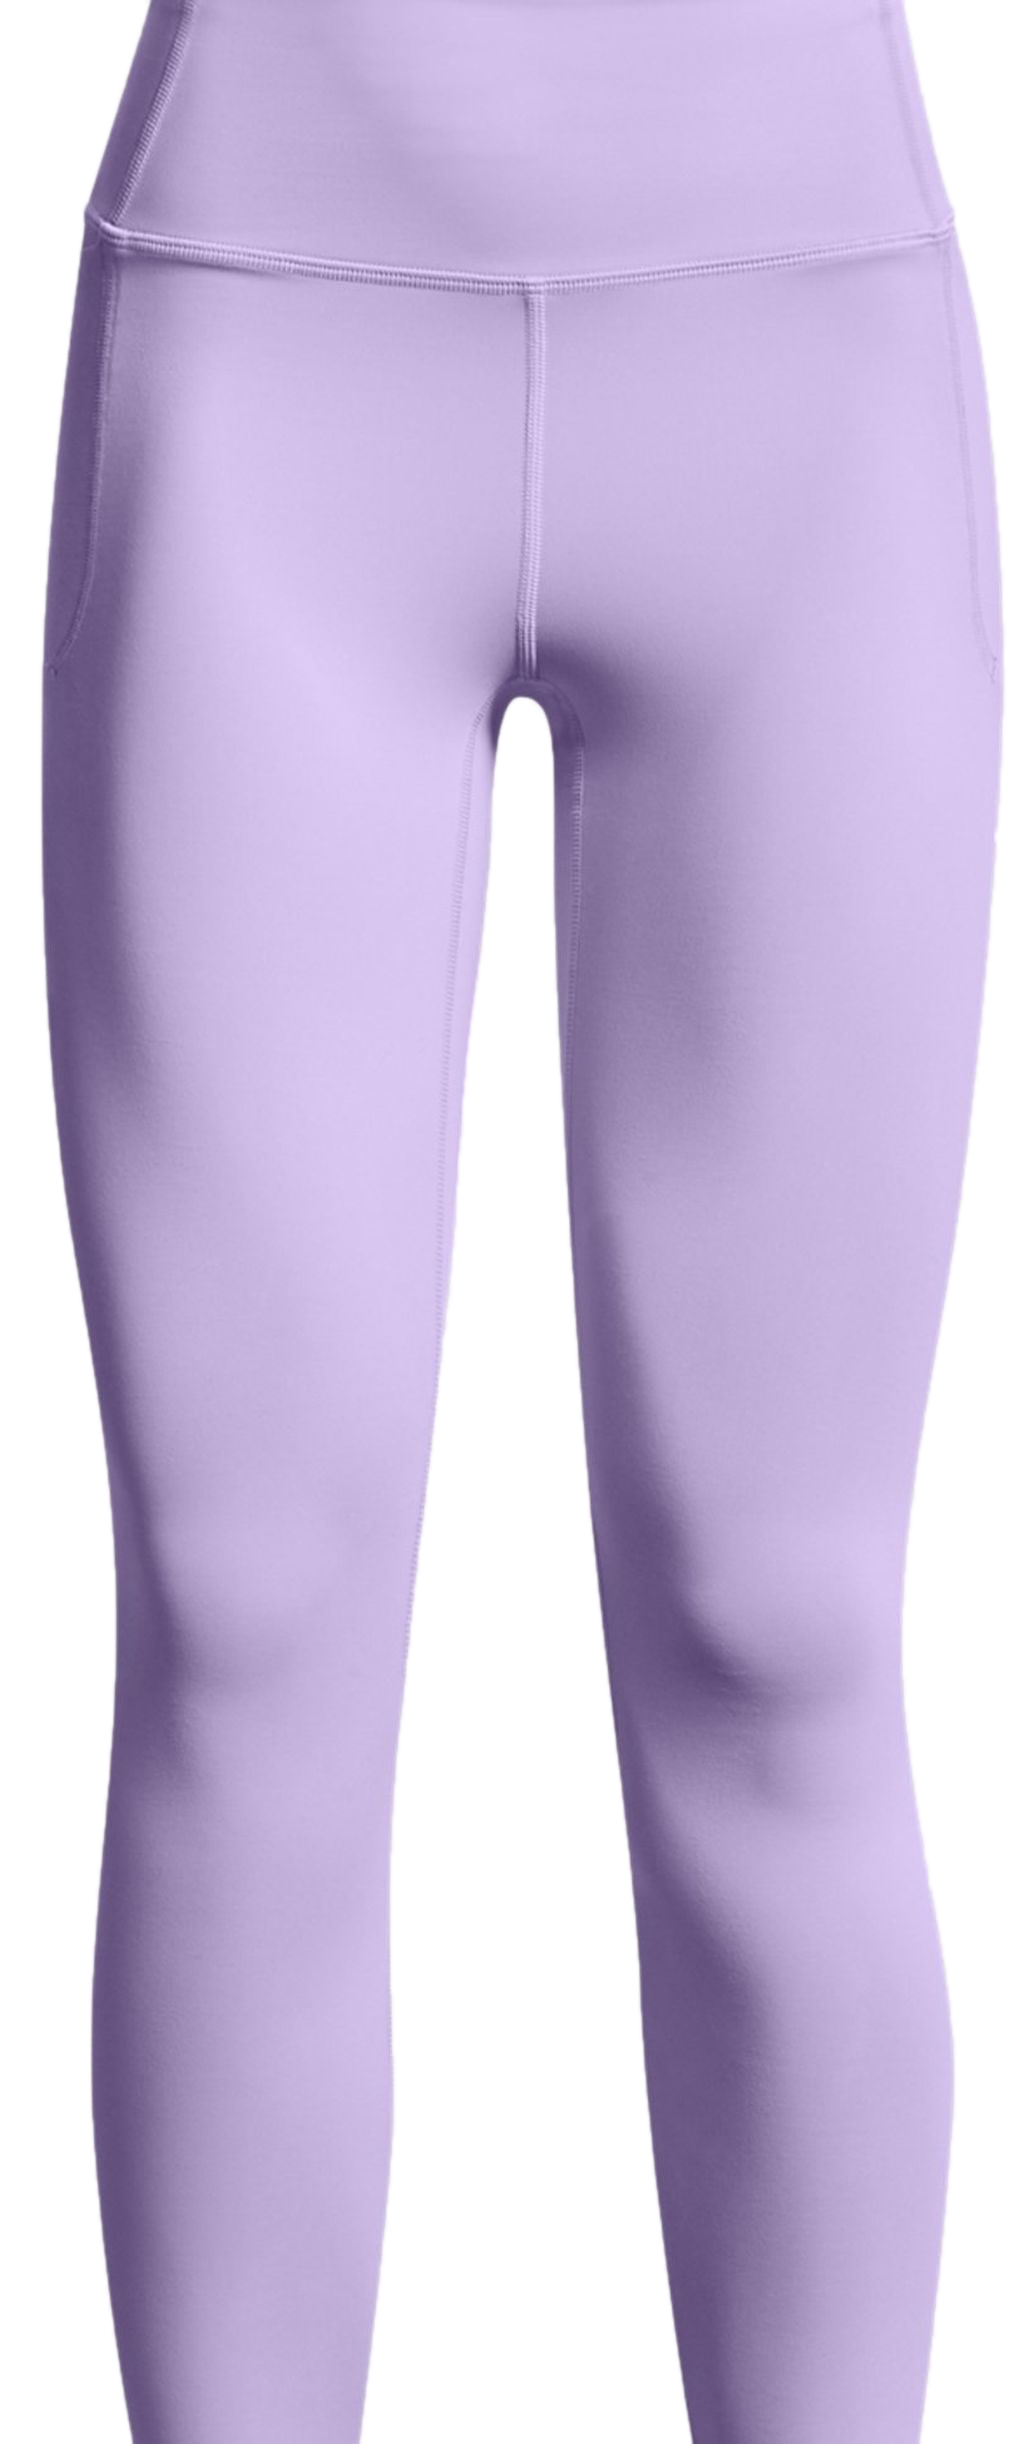  Meridian Ankle Leg, purple - women's leggings - UNDER ARMOUR  - 46.85 € - outdoorové oblečení a vybavení shop